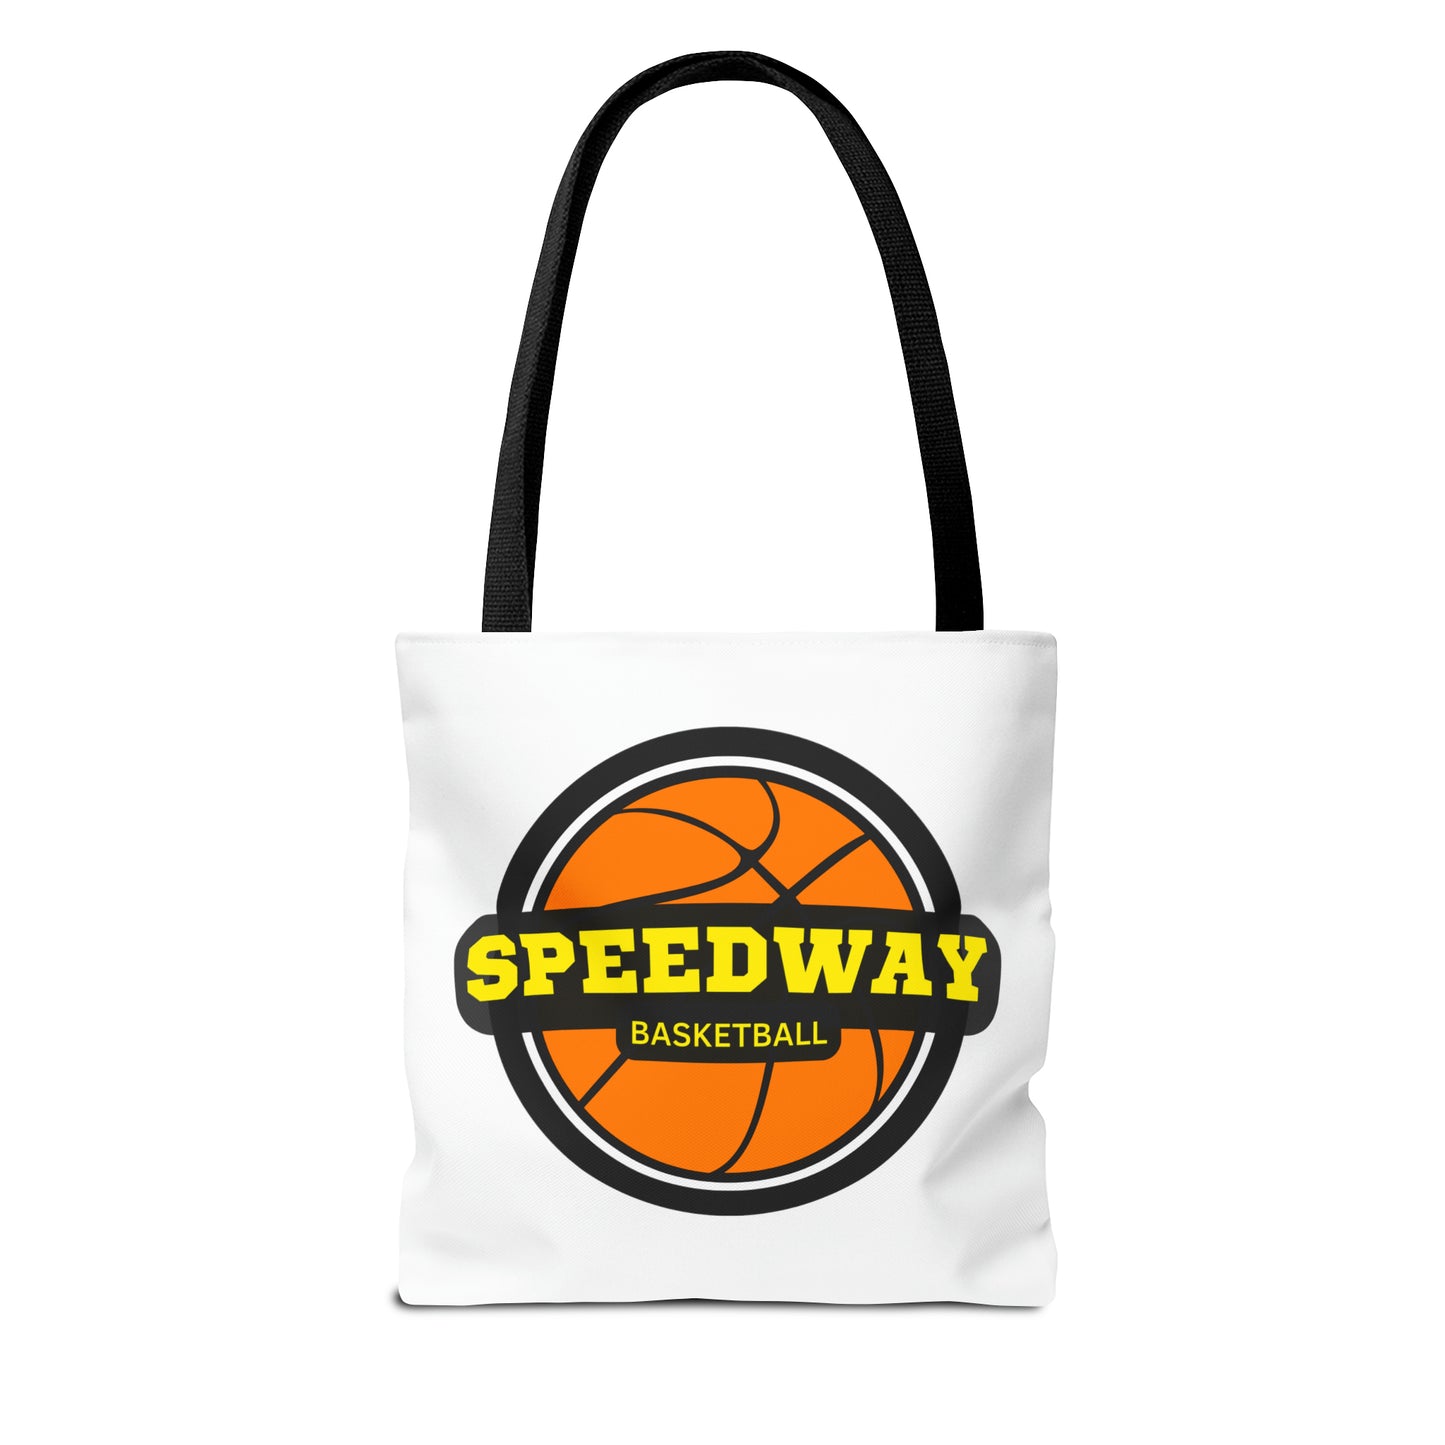 Speedway Basketball Tote Bag